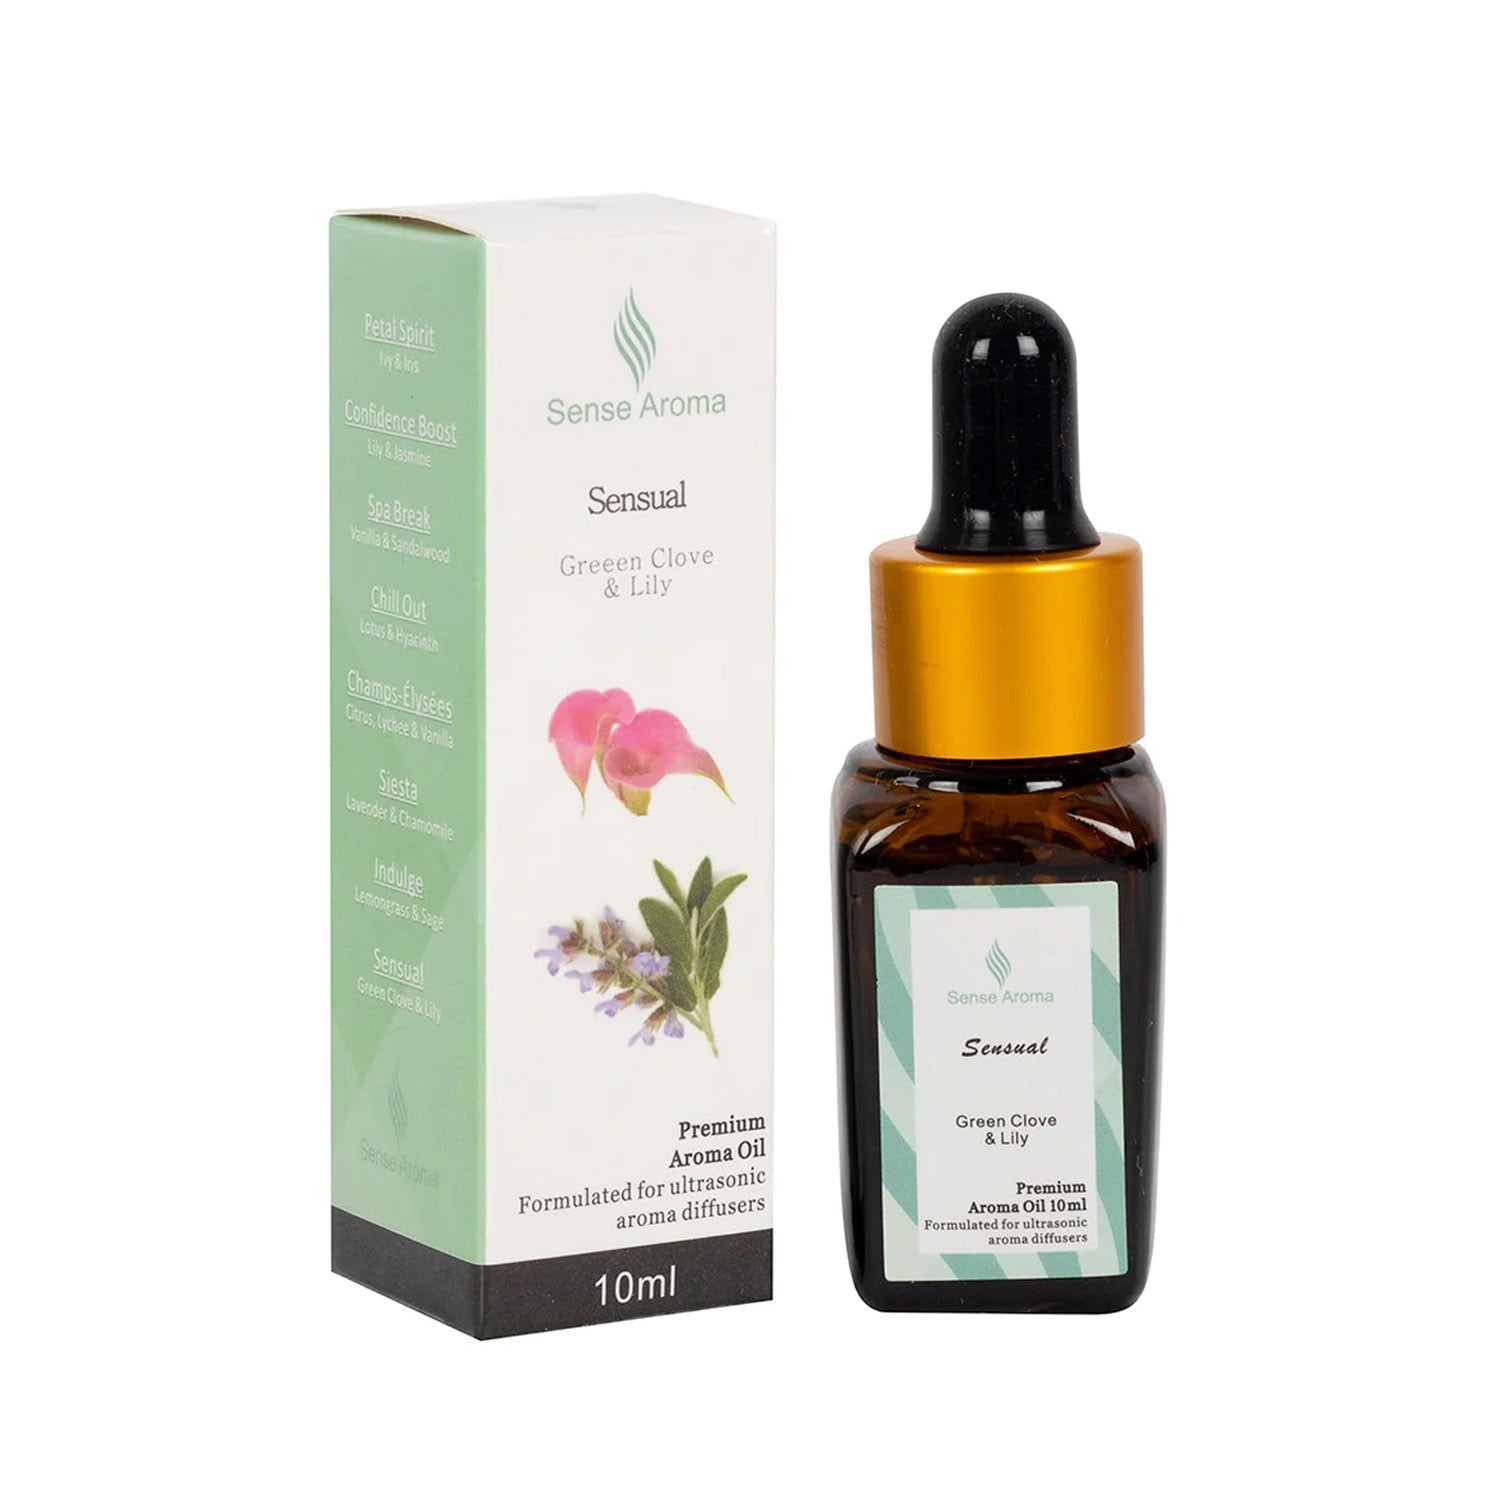 Sense Aroma Sensual Green Clove & Lily Premium Aroma Oil - 10ml